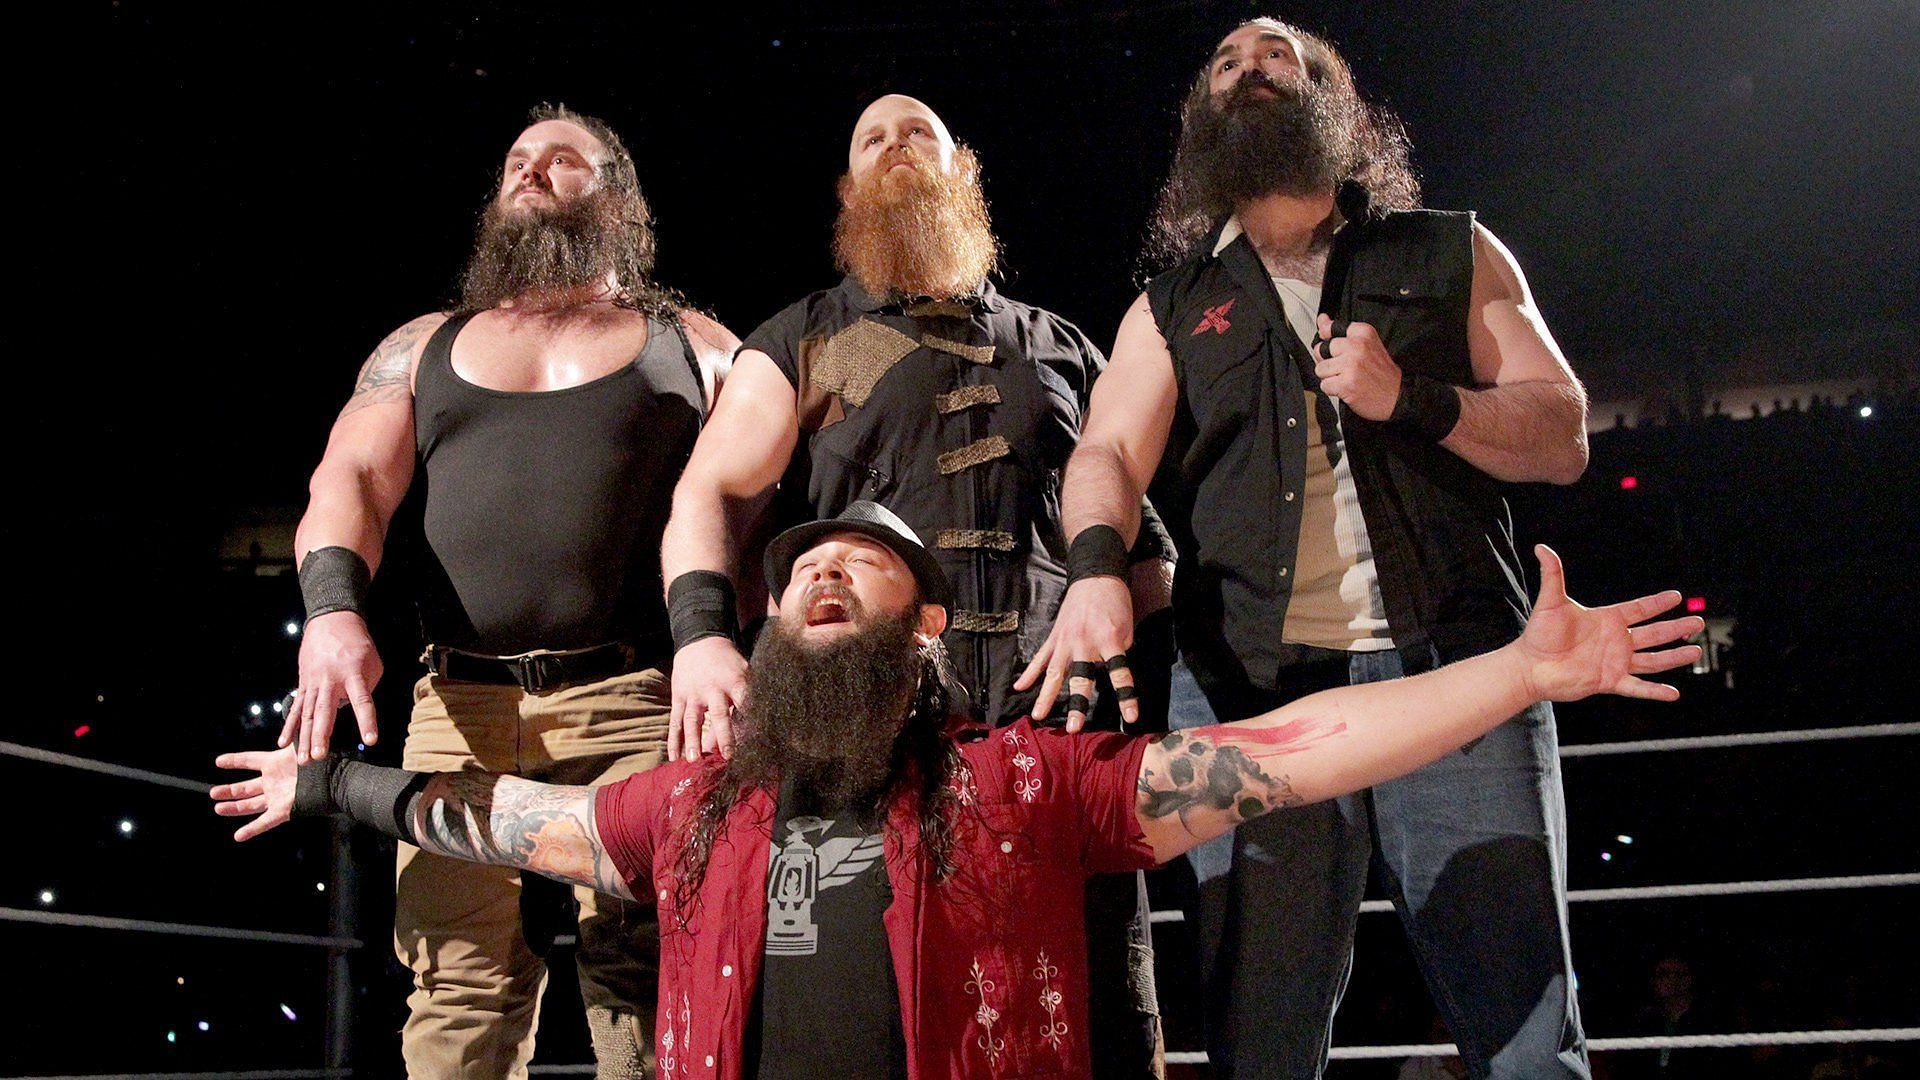 The Wyatt Family poses on WWE SmackDown - Bray Wyatt, Erick Rowan, Braun Strowman, Luke Harper